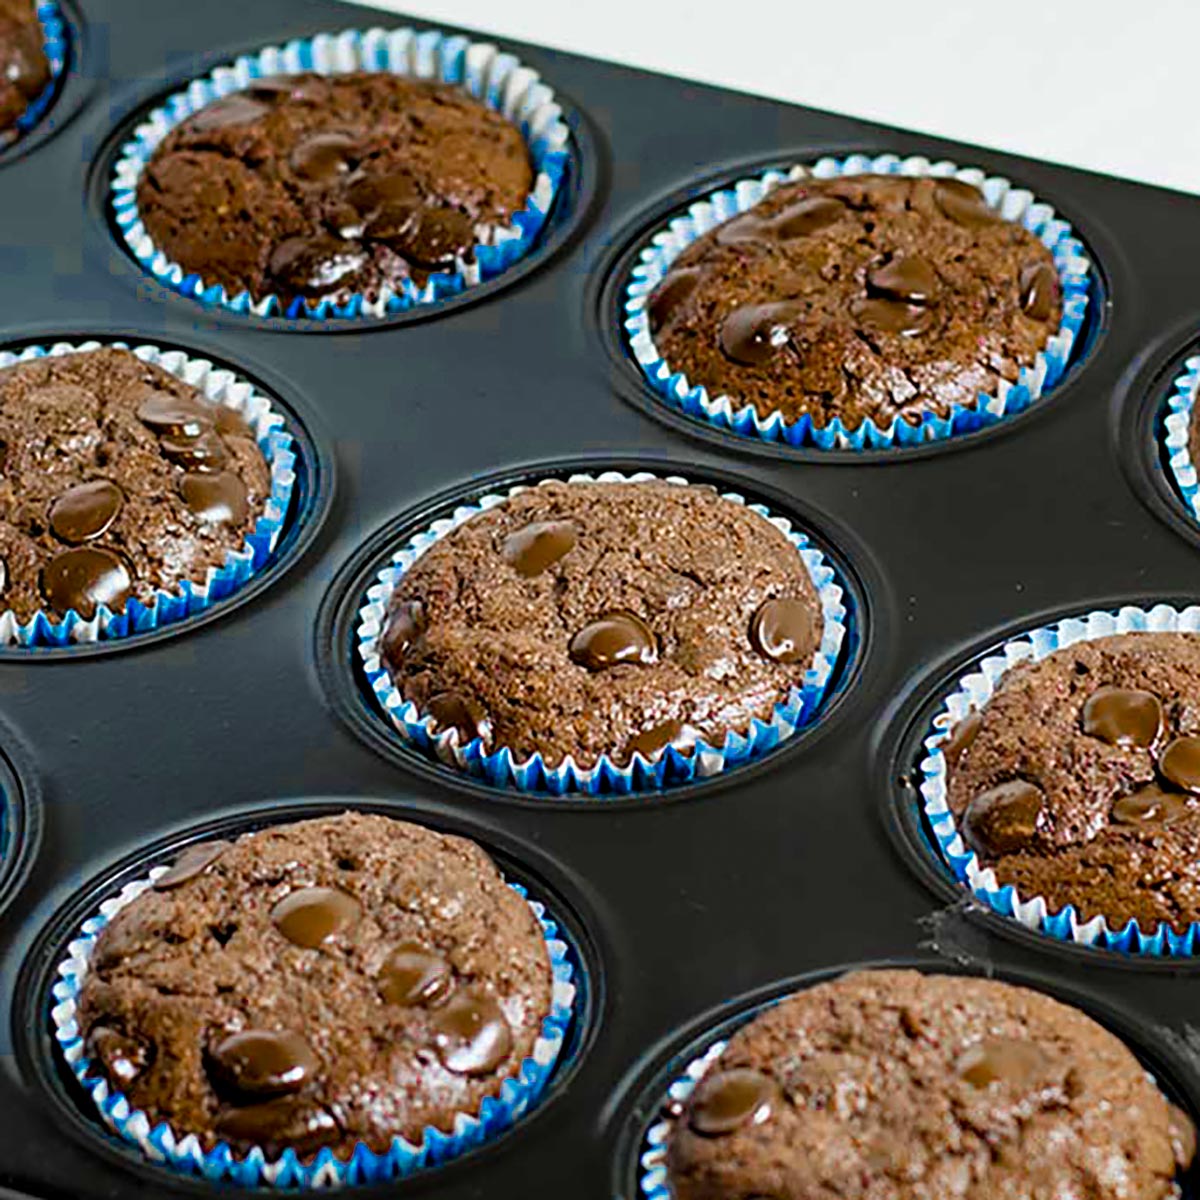 Keto chocolate muffins with choc chips.